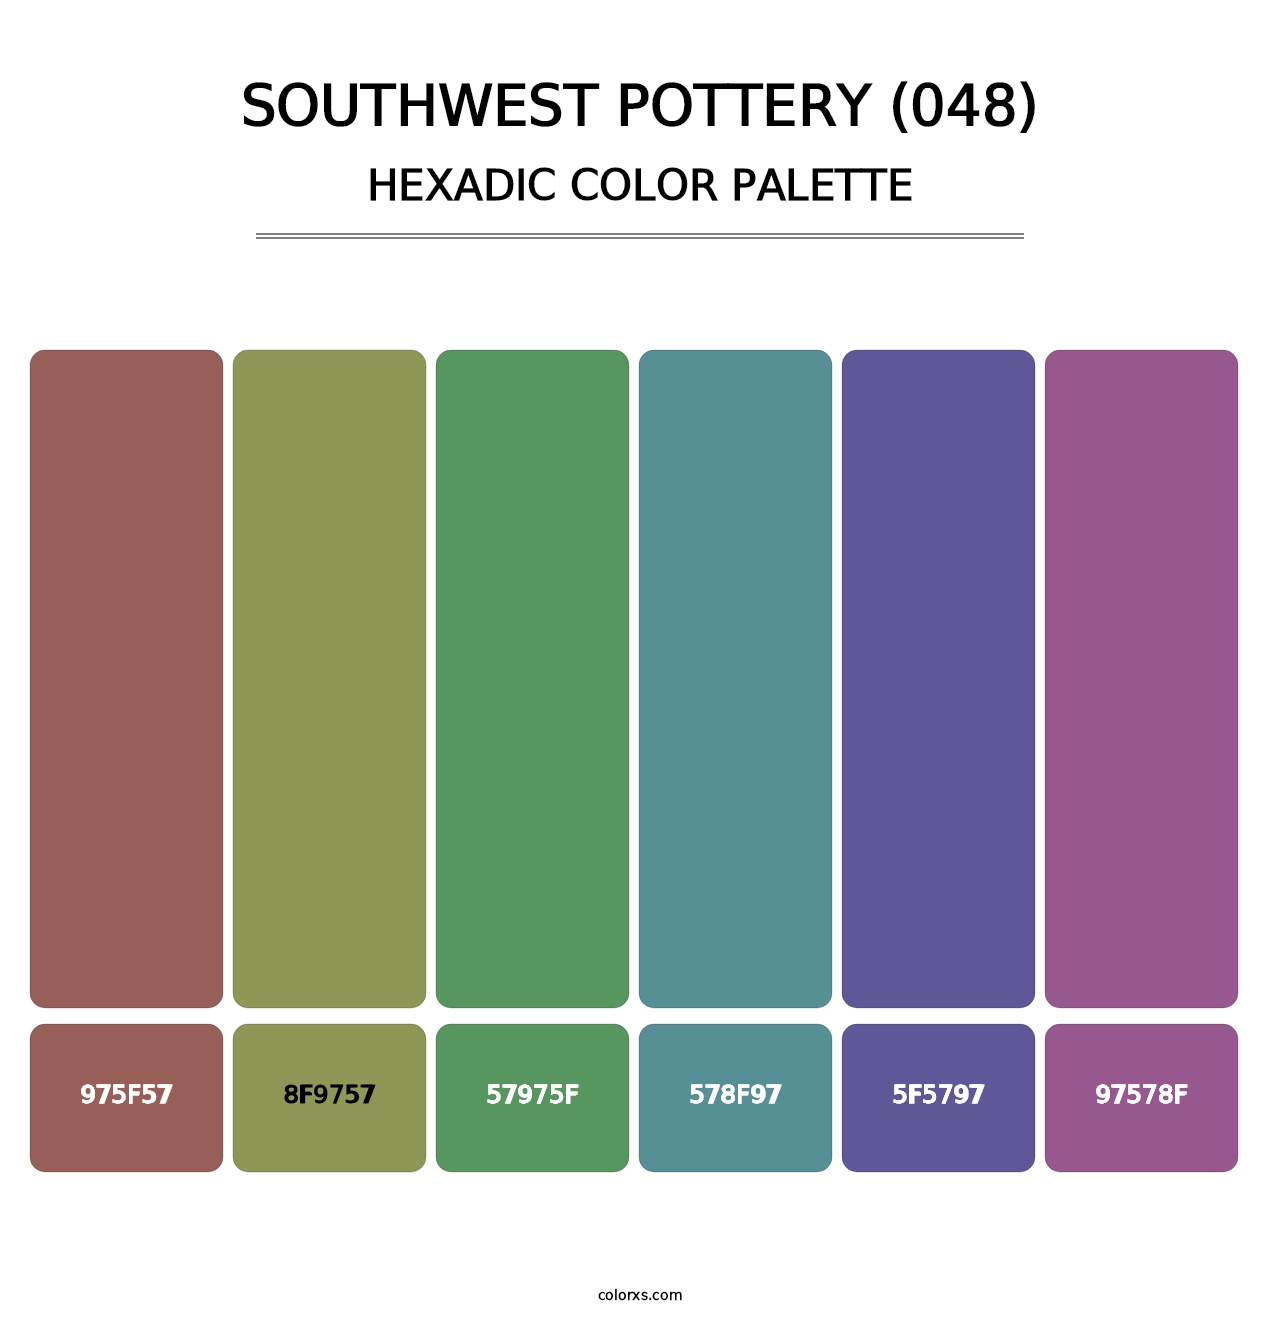 Southwest Pottery (048) - Hexadic Color Palette